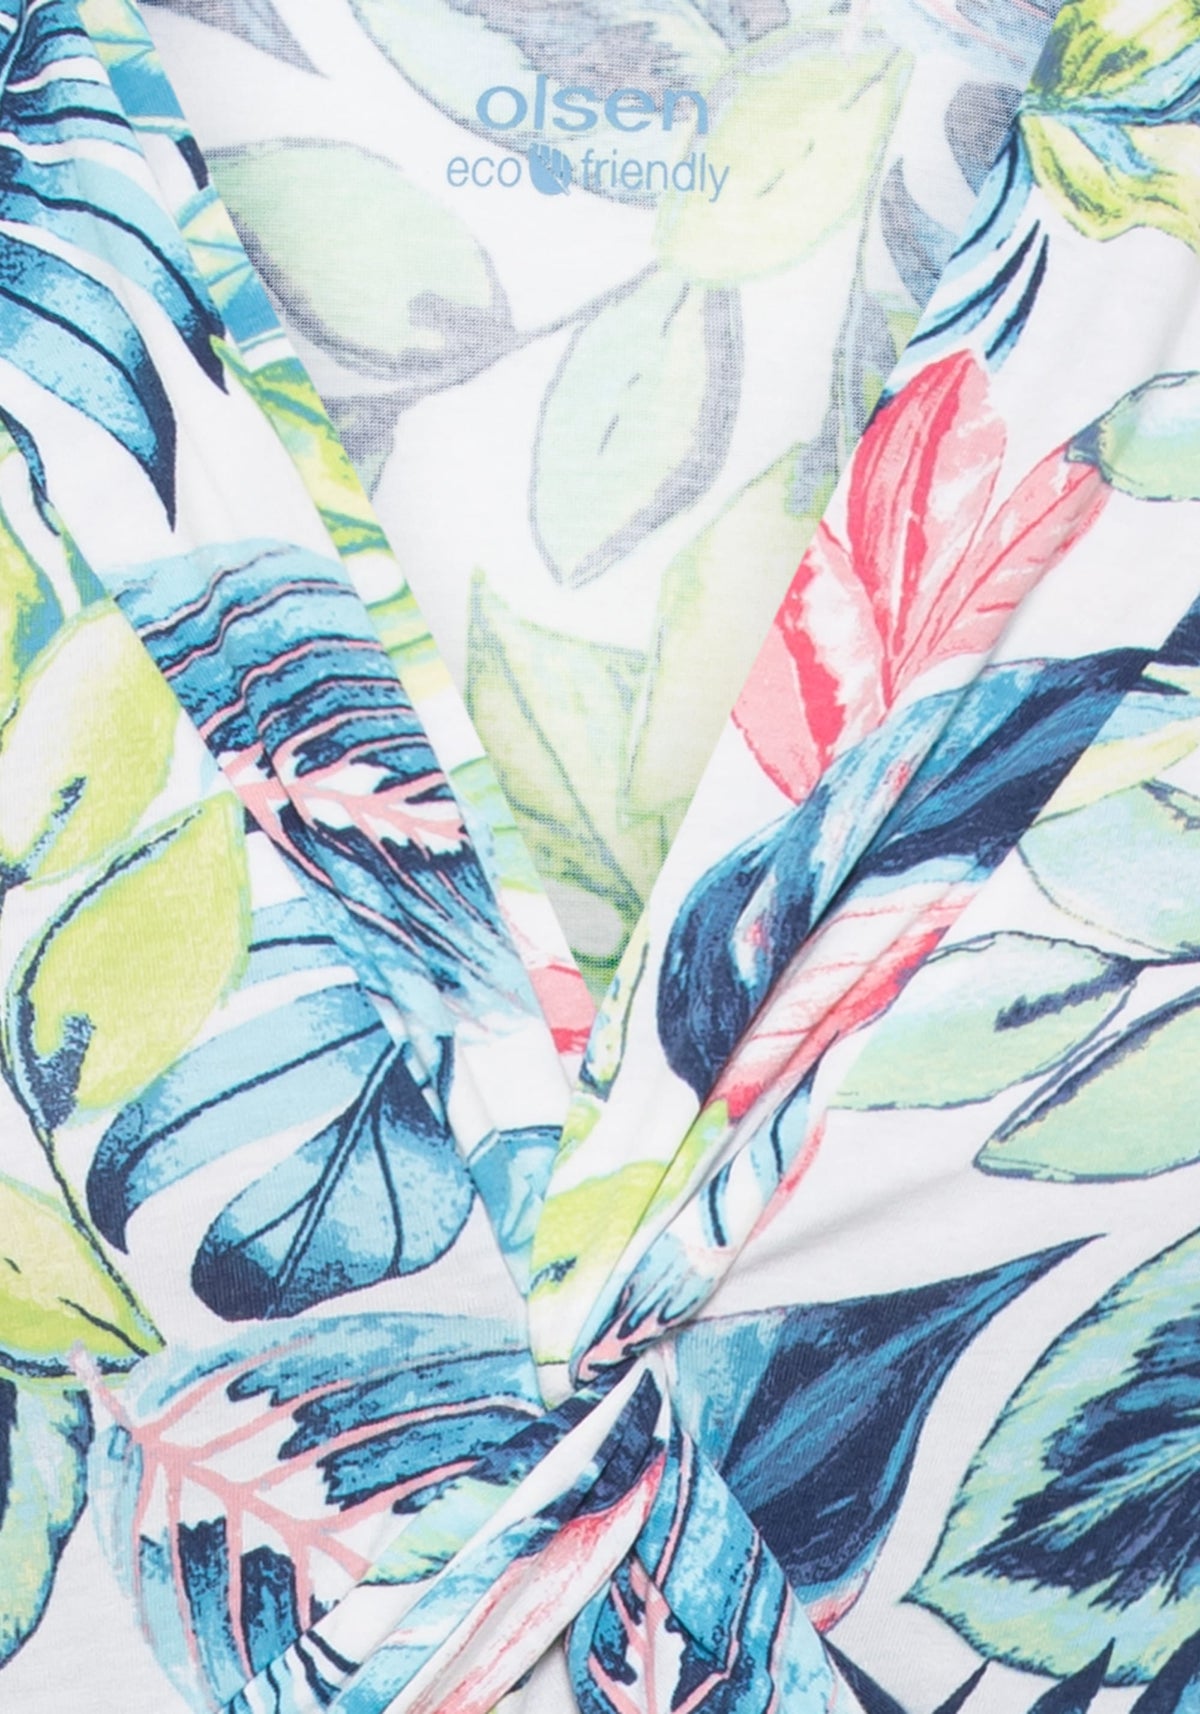 Short Sleeve Tropic Print A-Line Dress containing TENCEL™ Modal